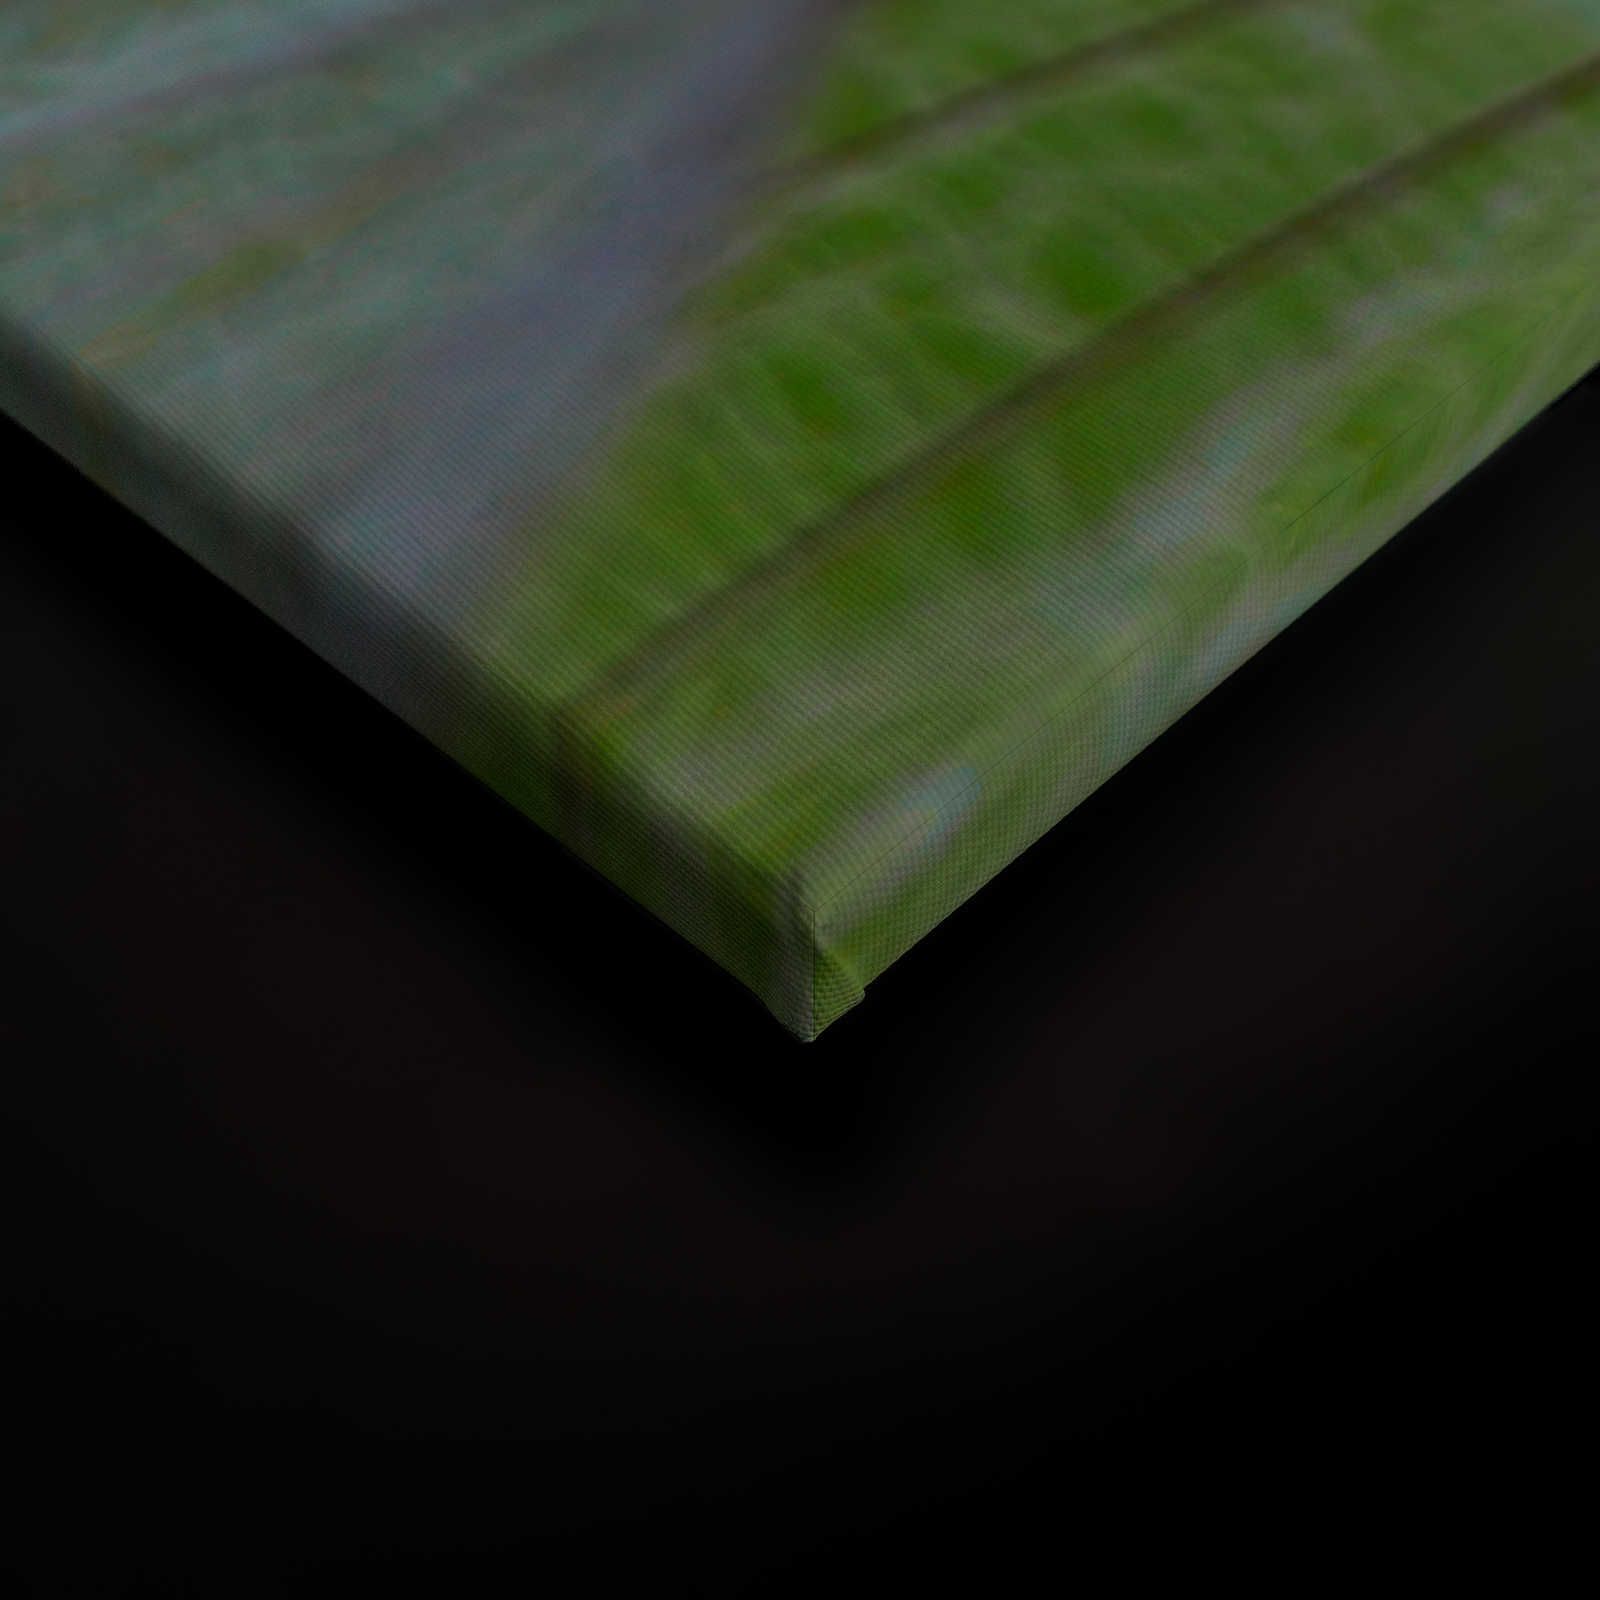             Leinwandbild Detailaufnahme mit Pusteblumen – 0,90 m x 0,60 m
        